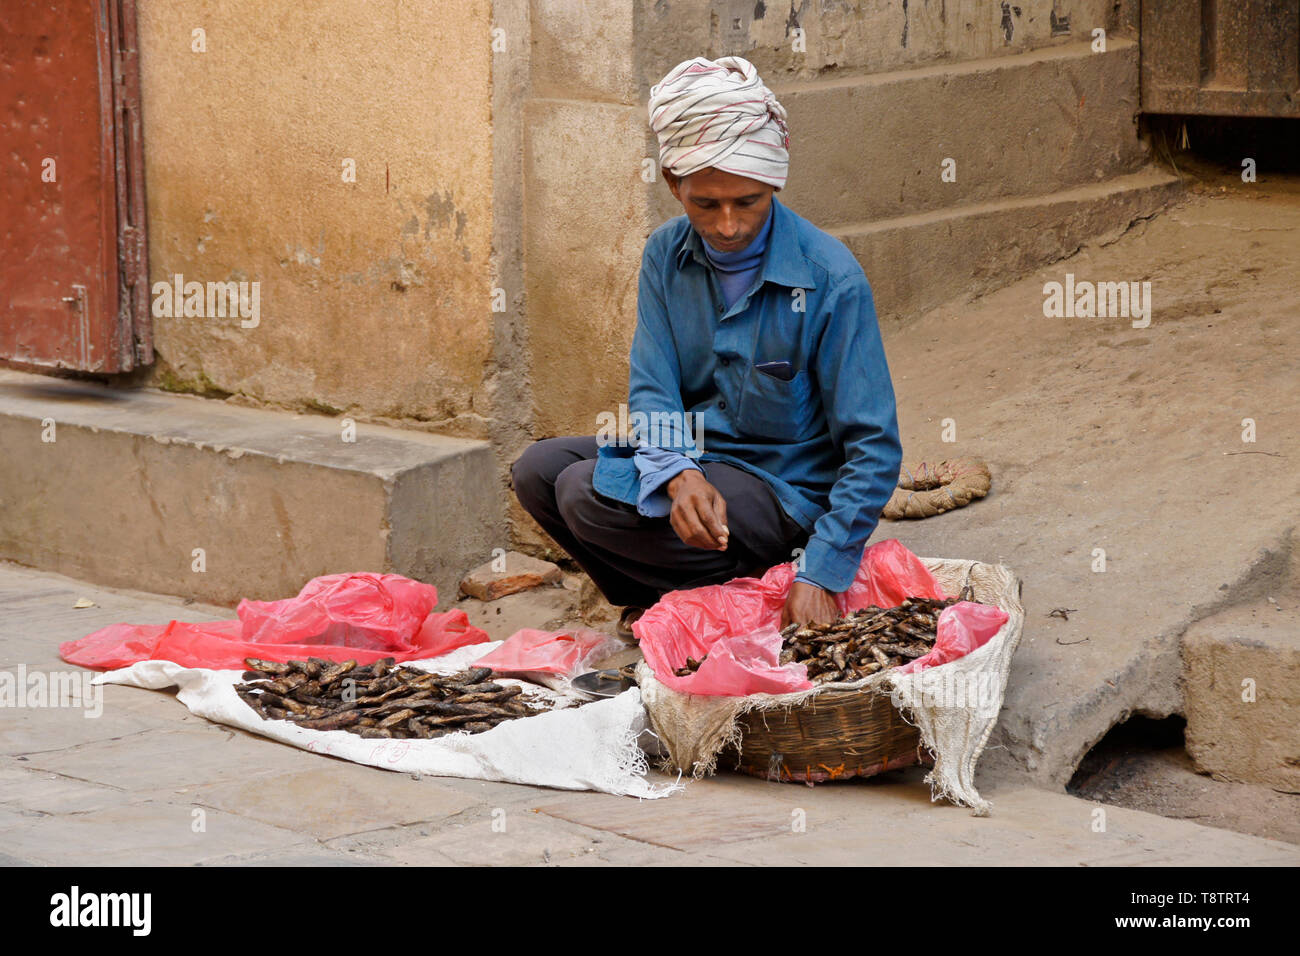 Street vendor selling dried fish, Kathmandu, Nepal Stock Photo